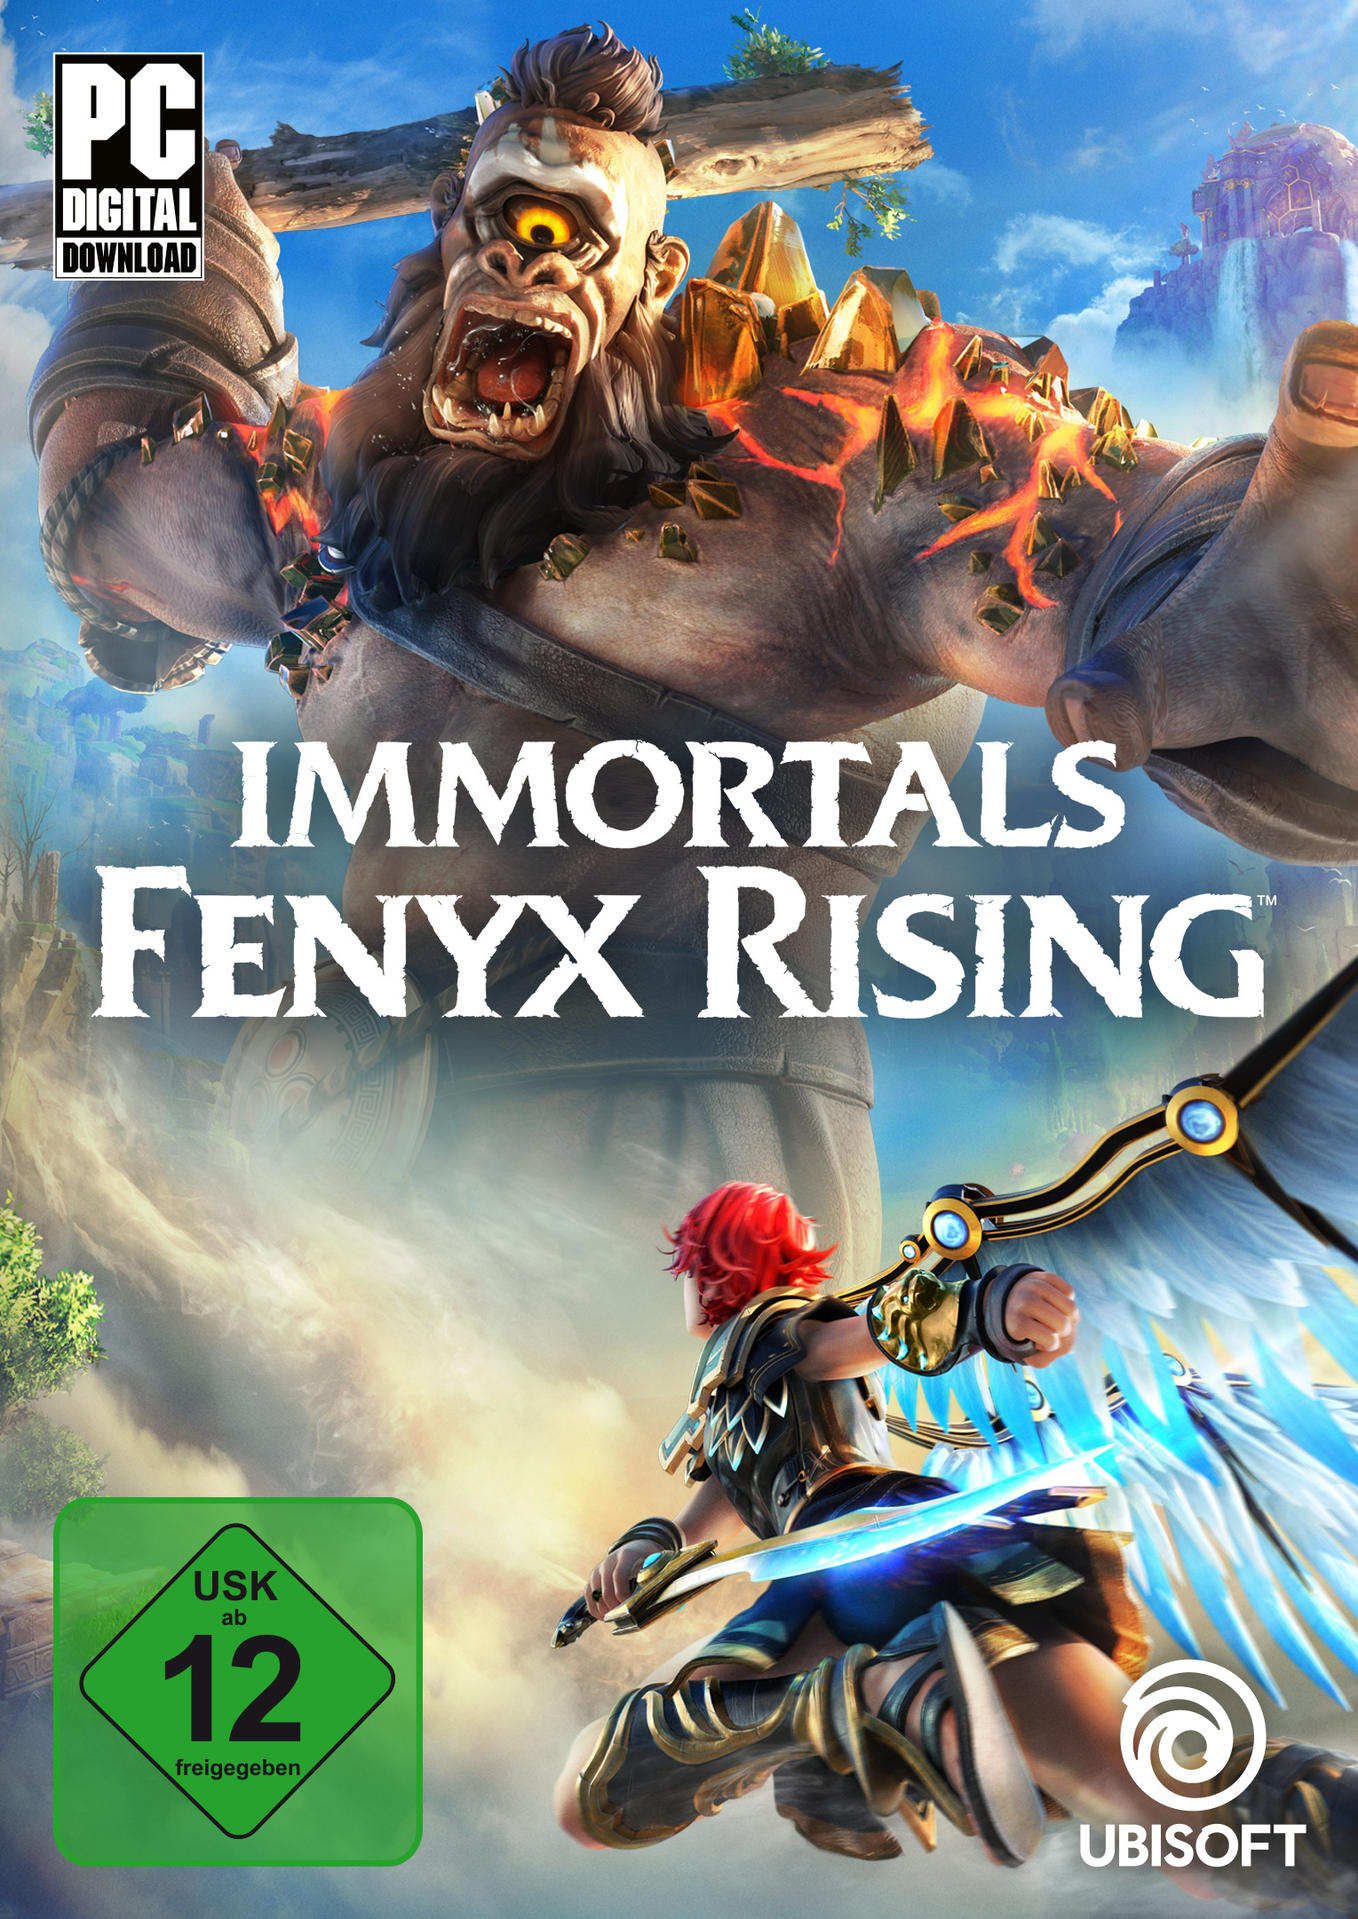 (Code Immortals in der [PC] - Box) Rising Fenyx